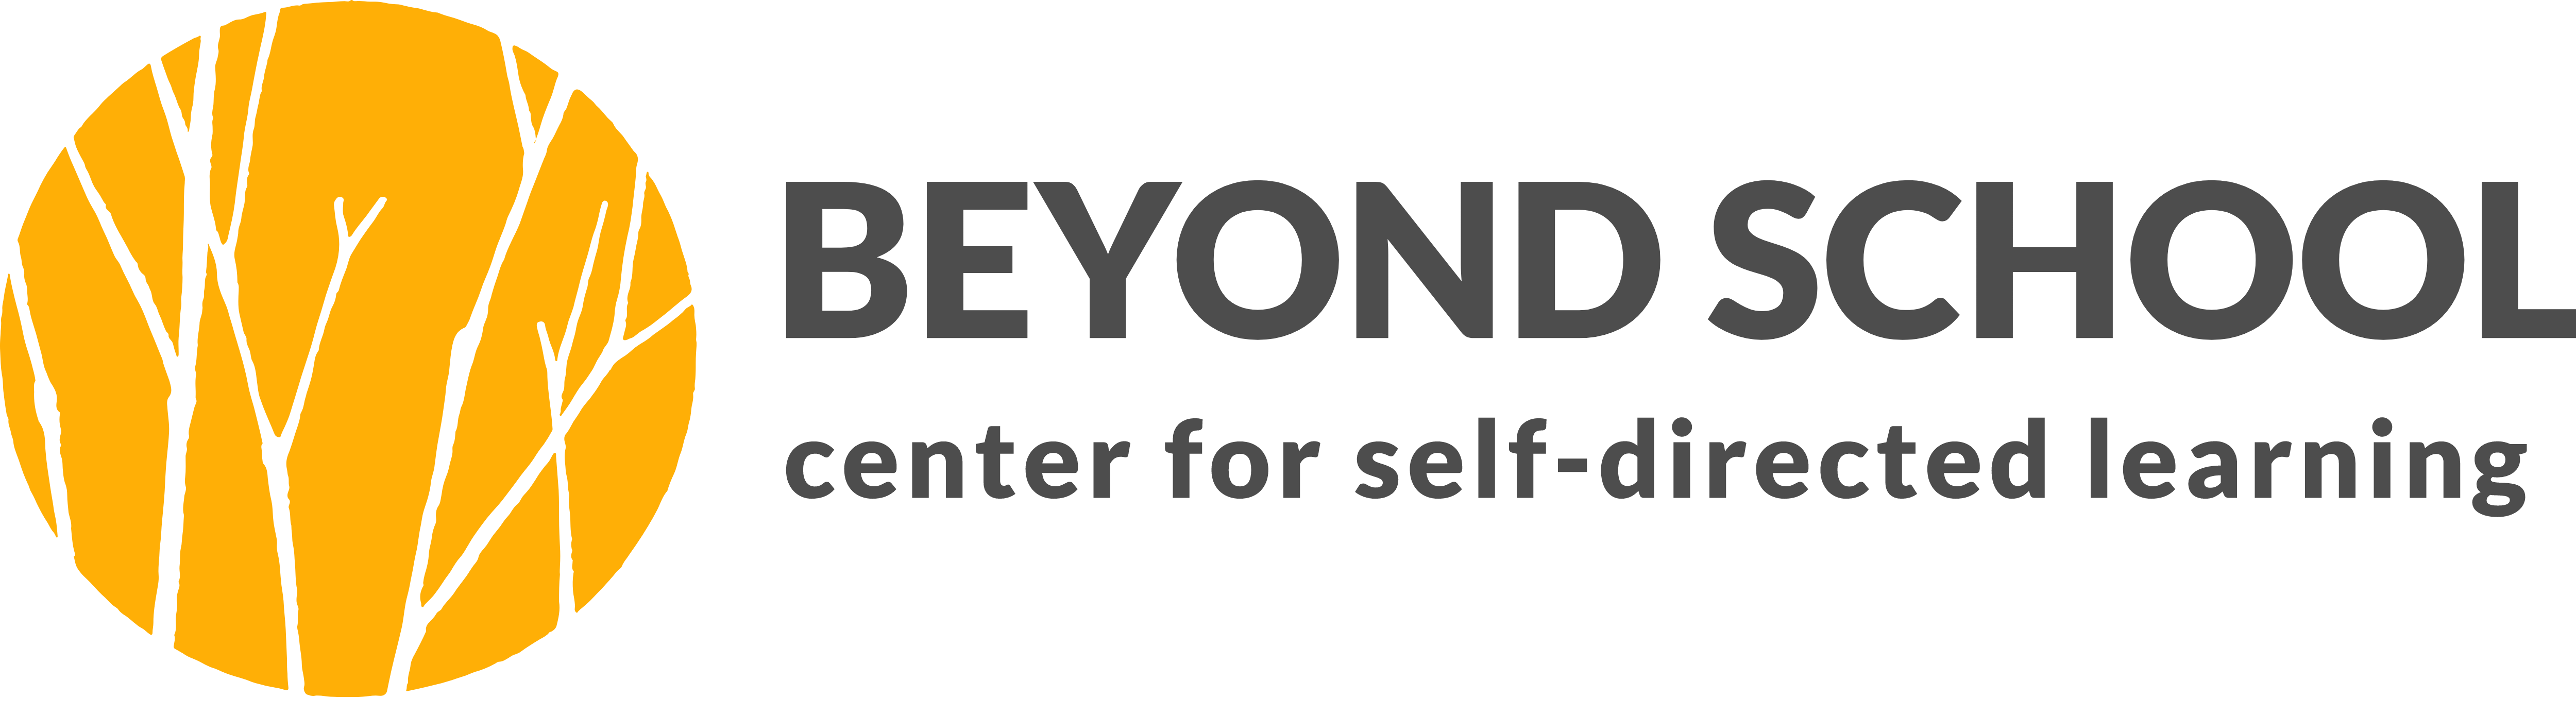 Beyond School logo